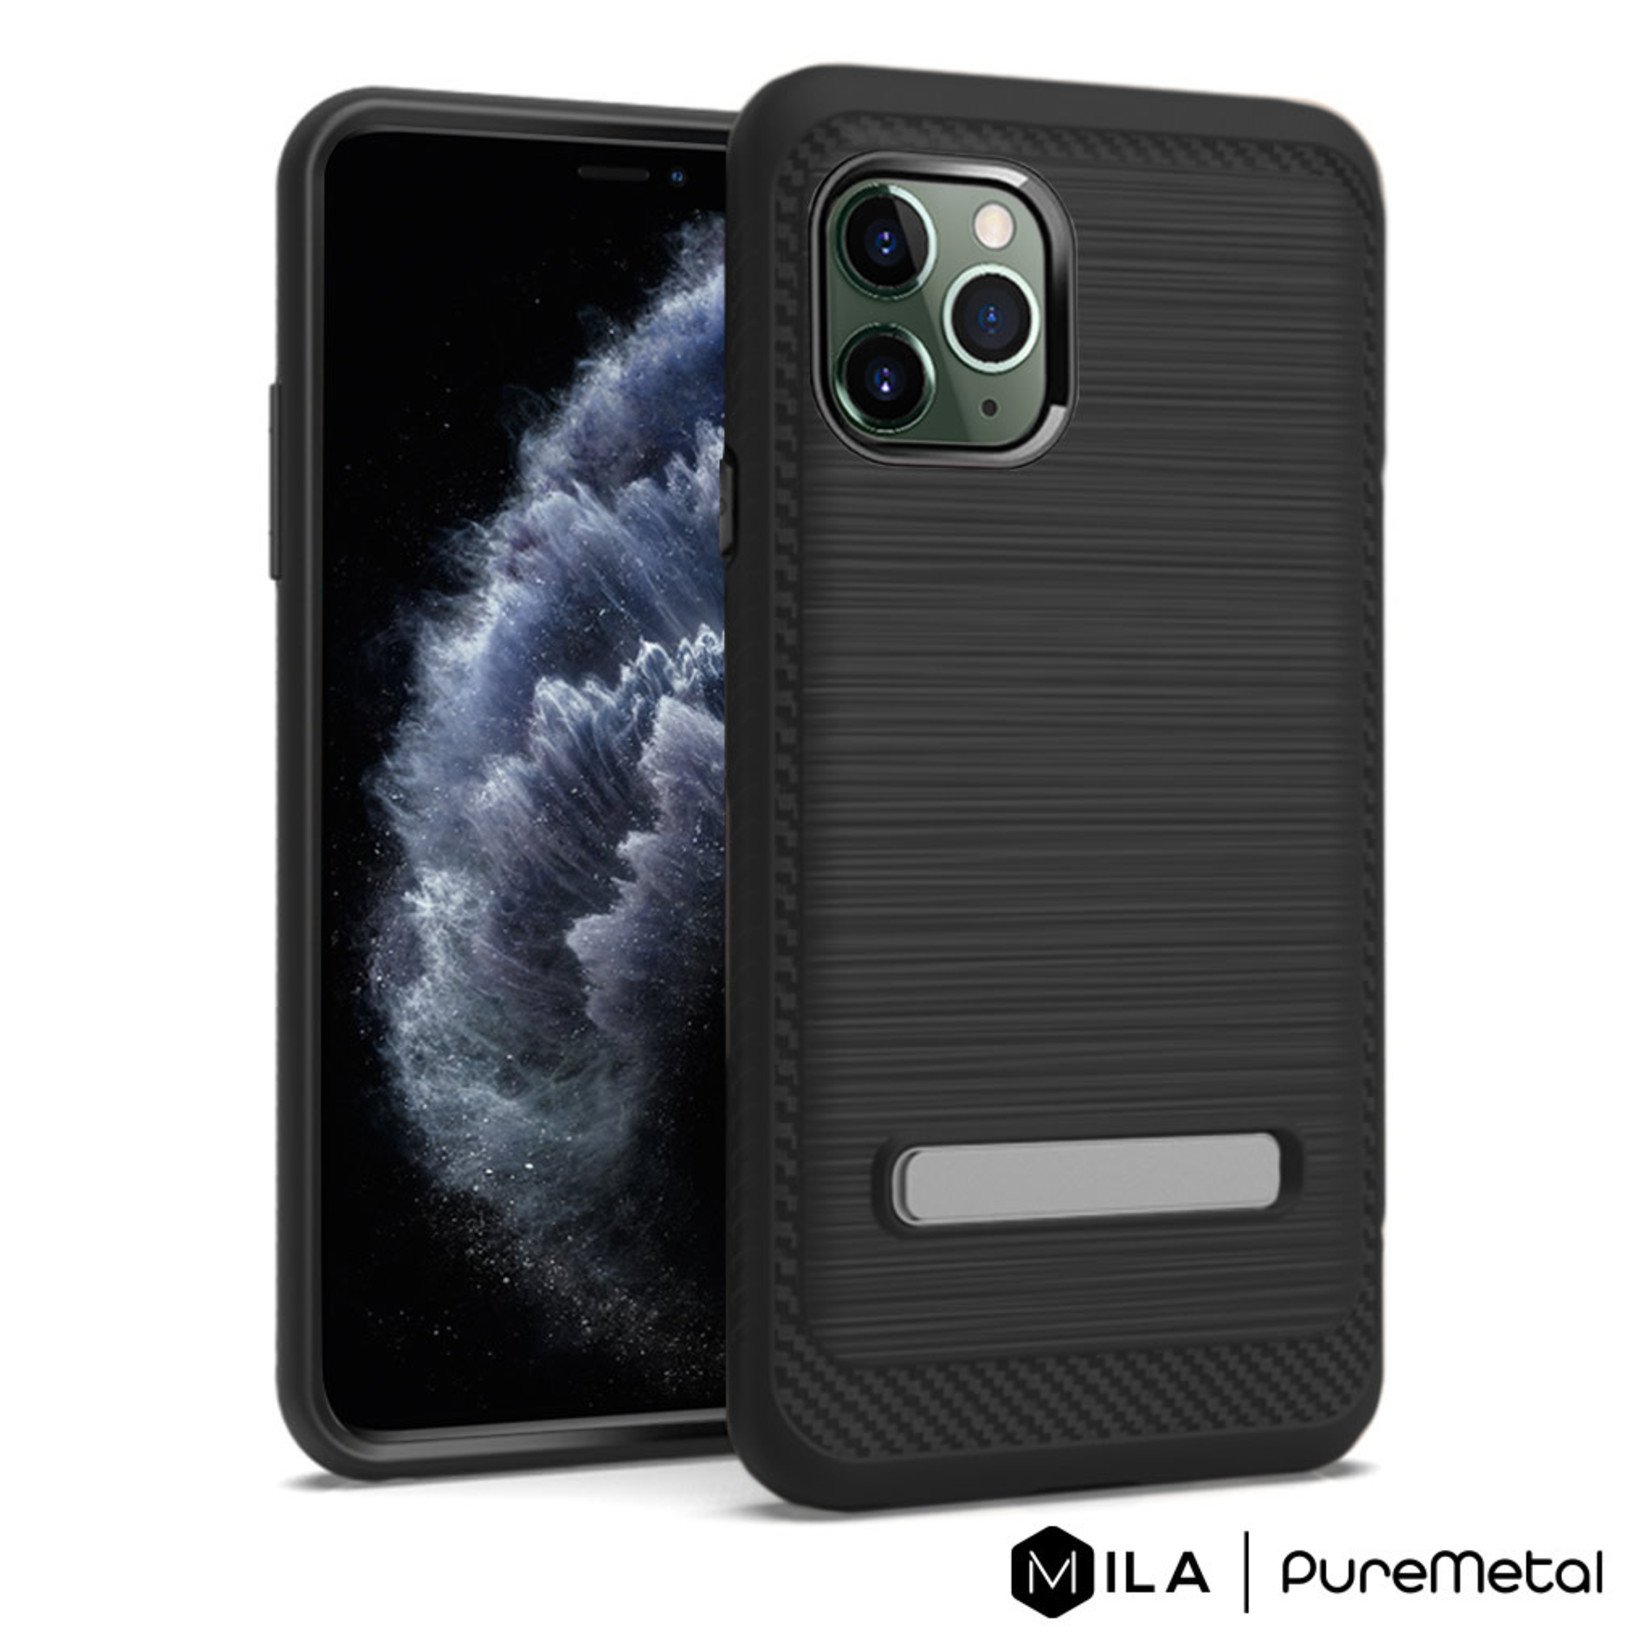 MILA | PureMetal Case for iPhone 11 Pro Max